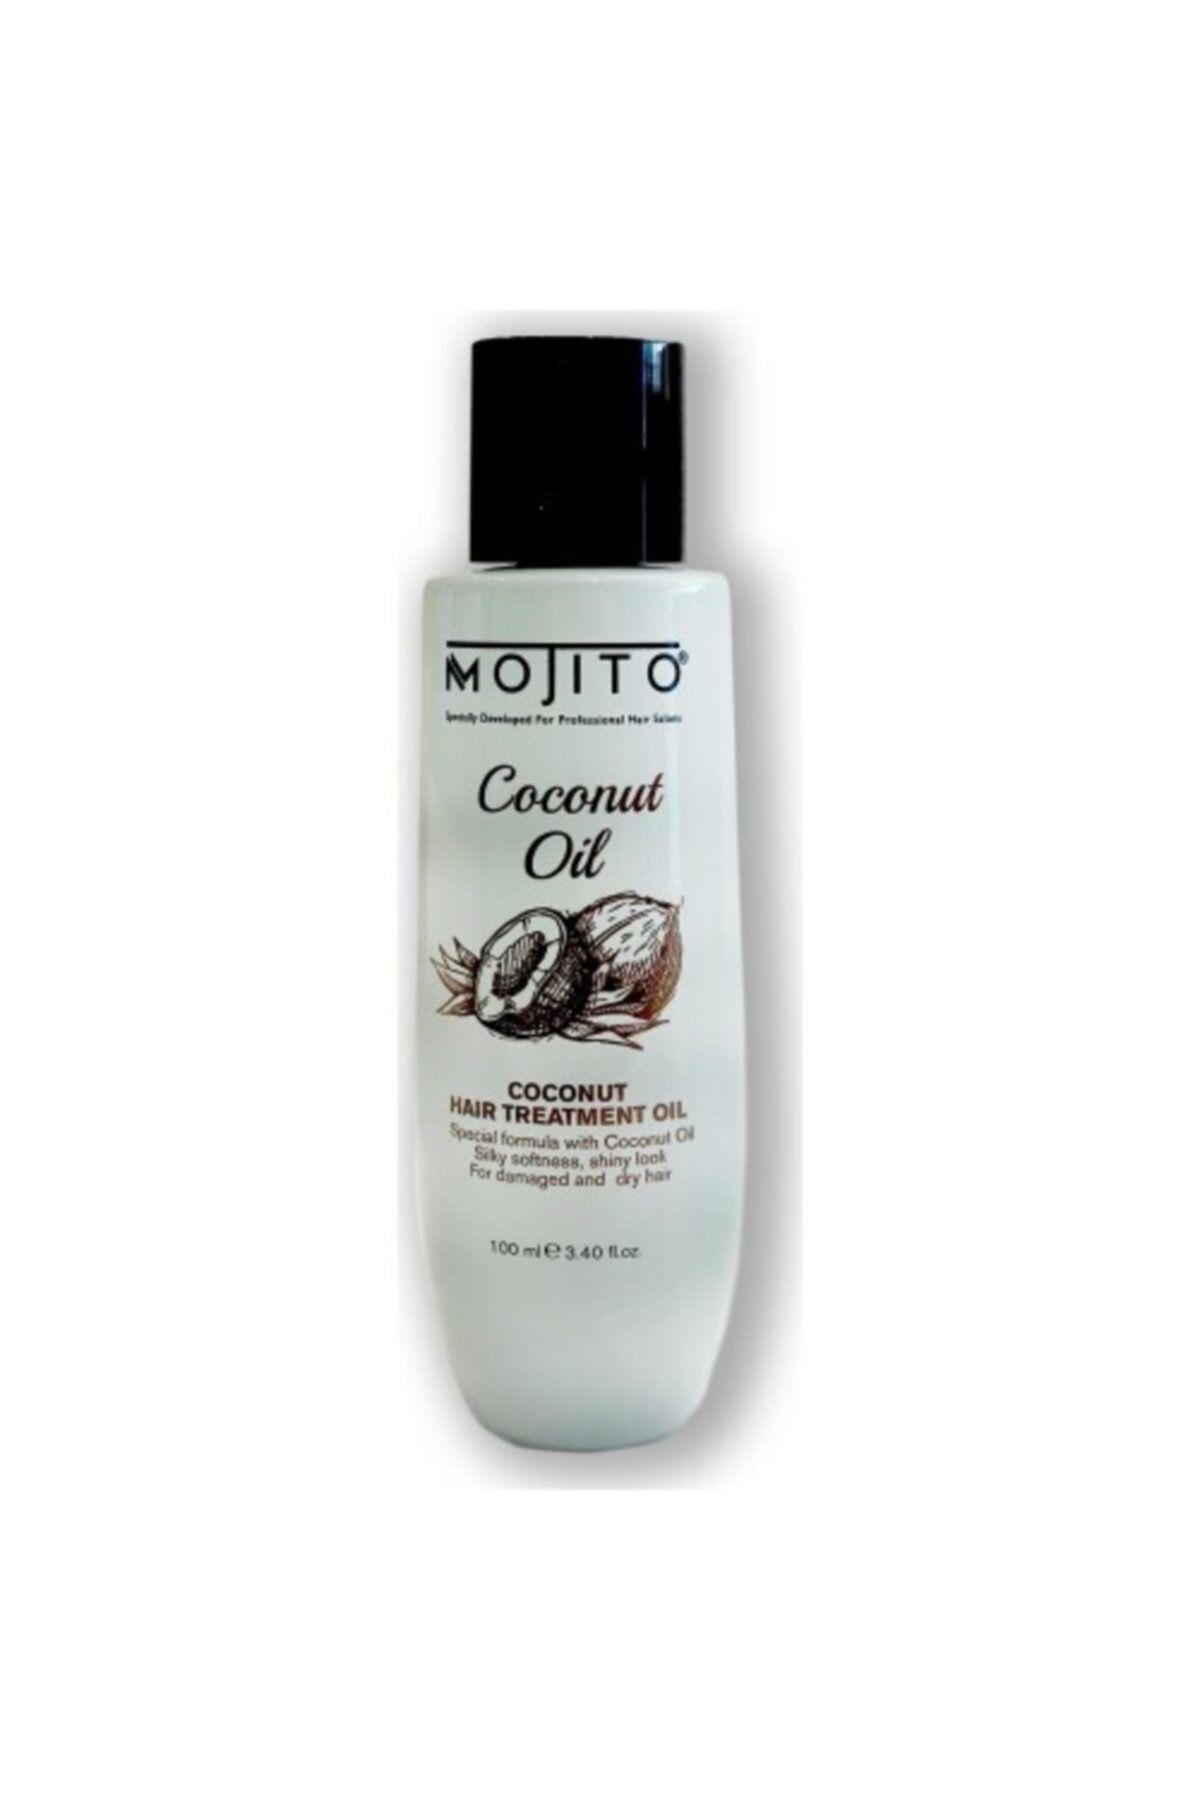 Mojito Coconut Oil Hindistan Cevizi Saç Bakım Yağı 100 ml